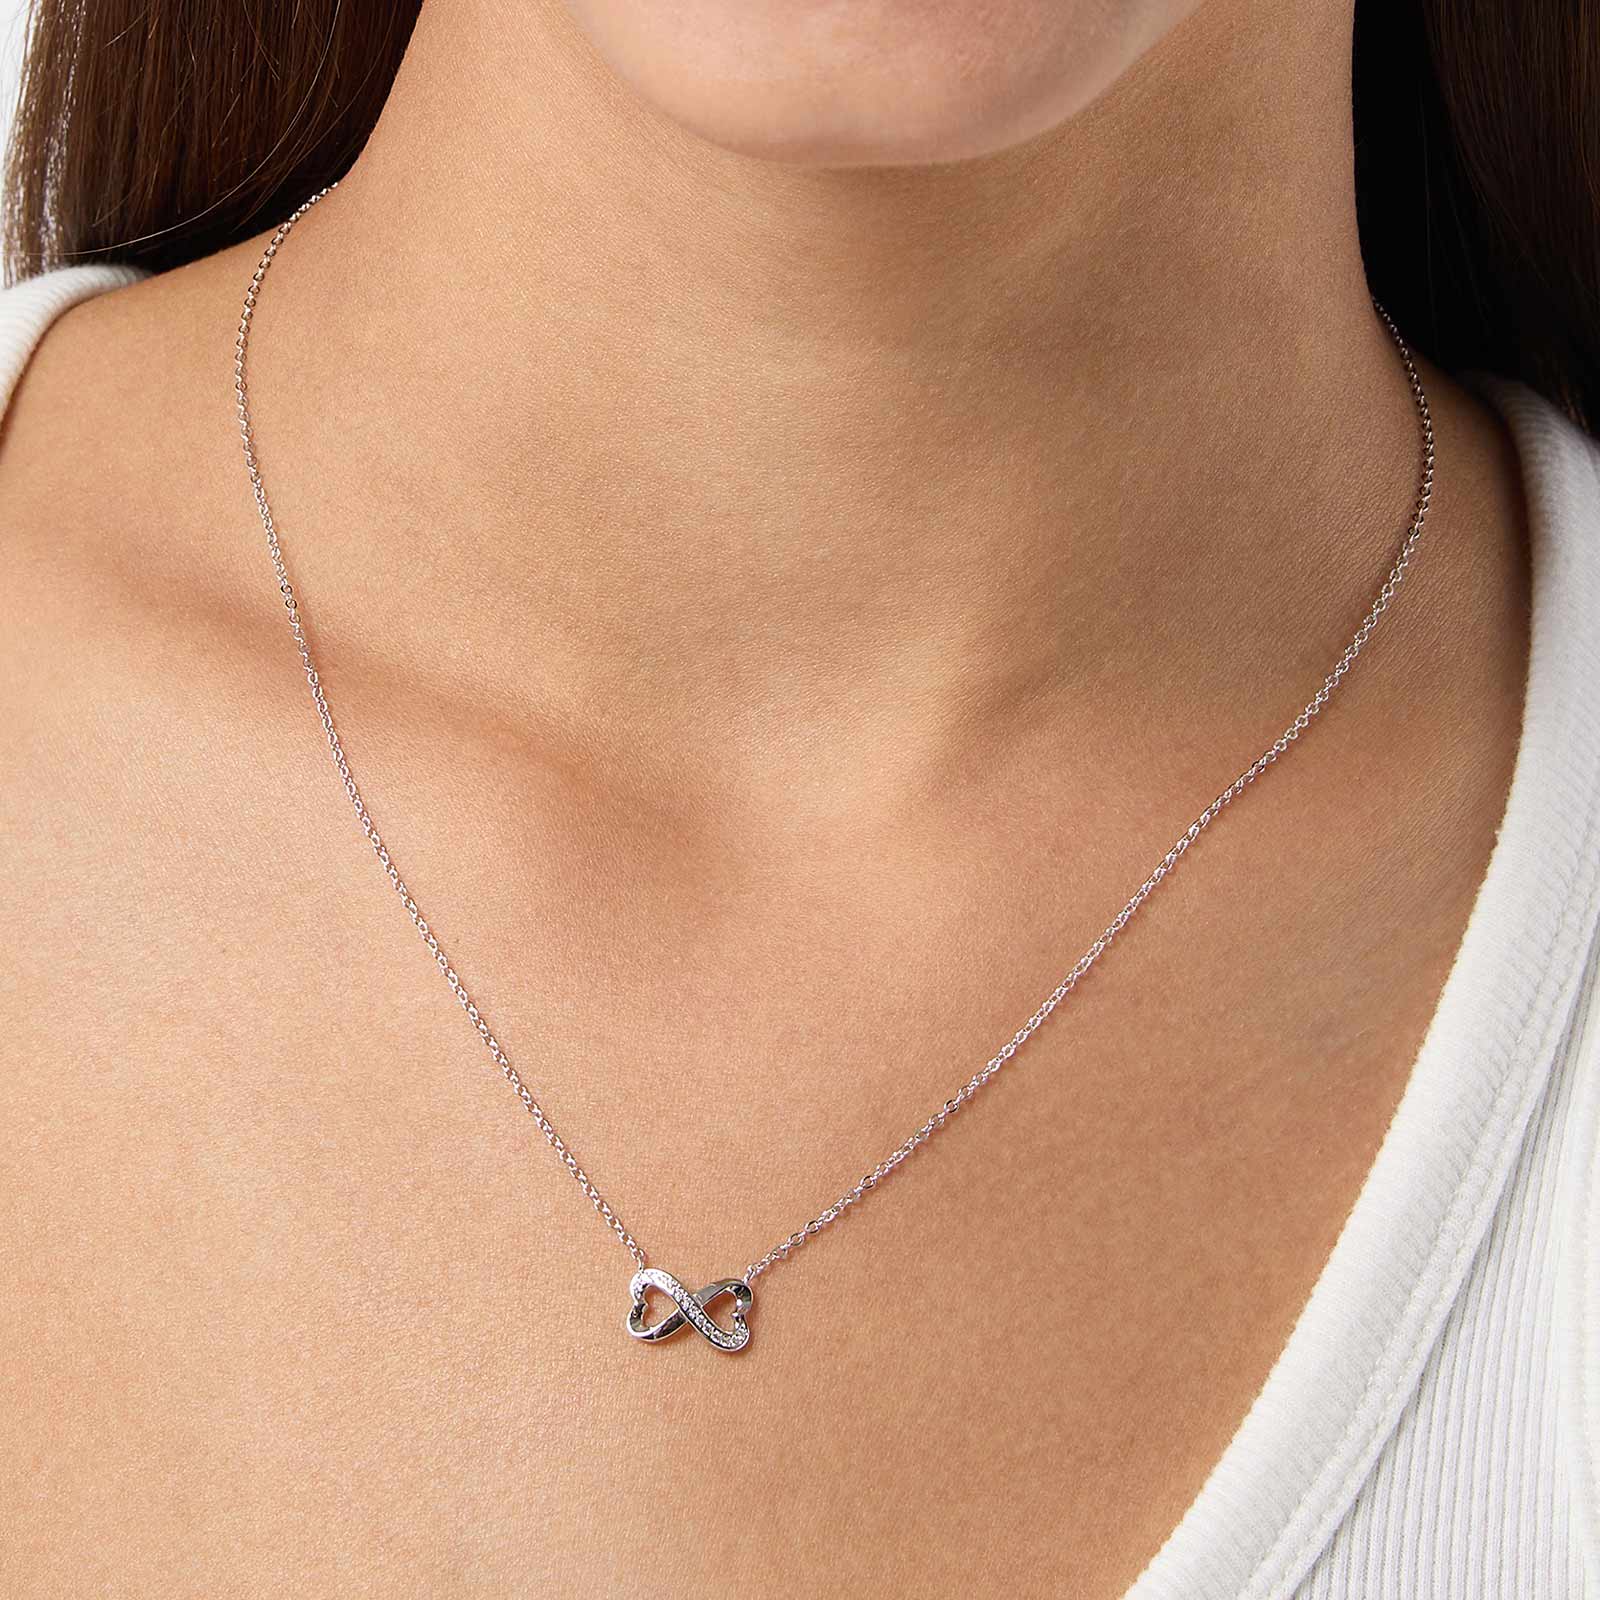 Halsband i äkta silver - infinitysybol/hjärtan, 42+3cm